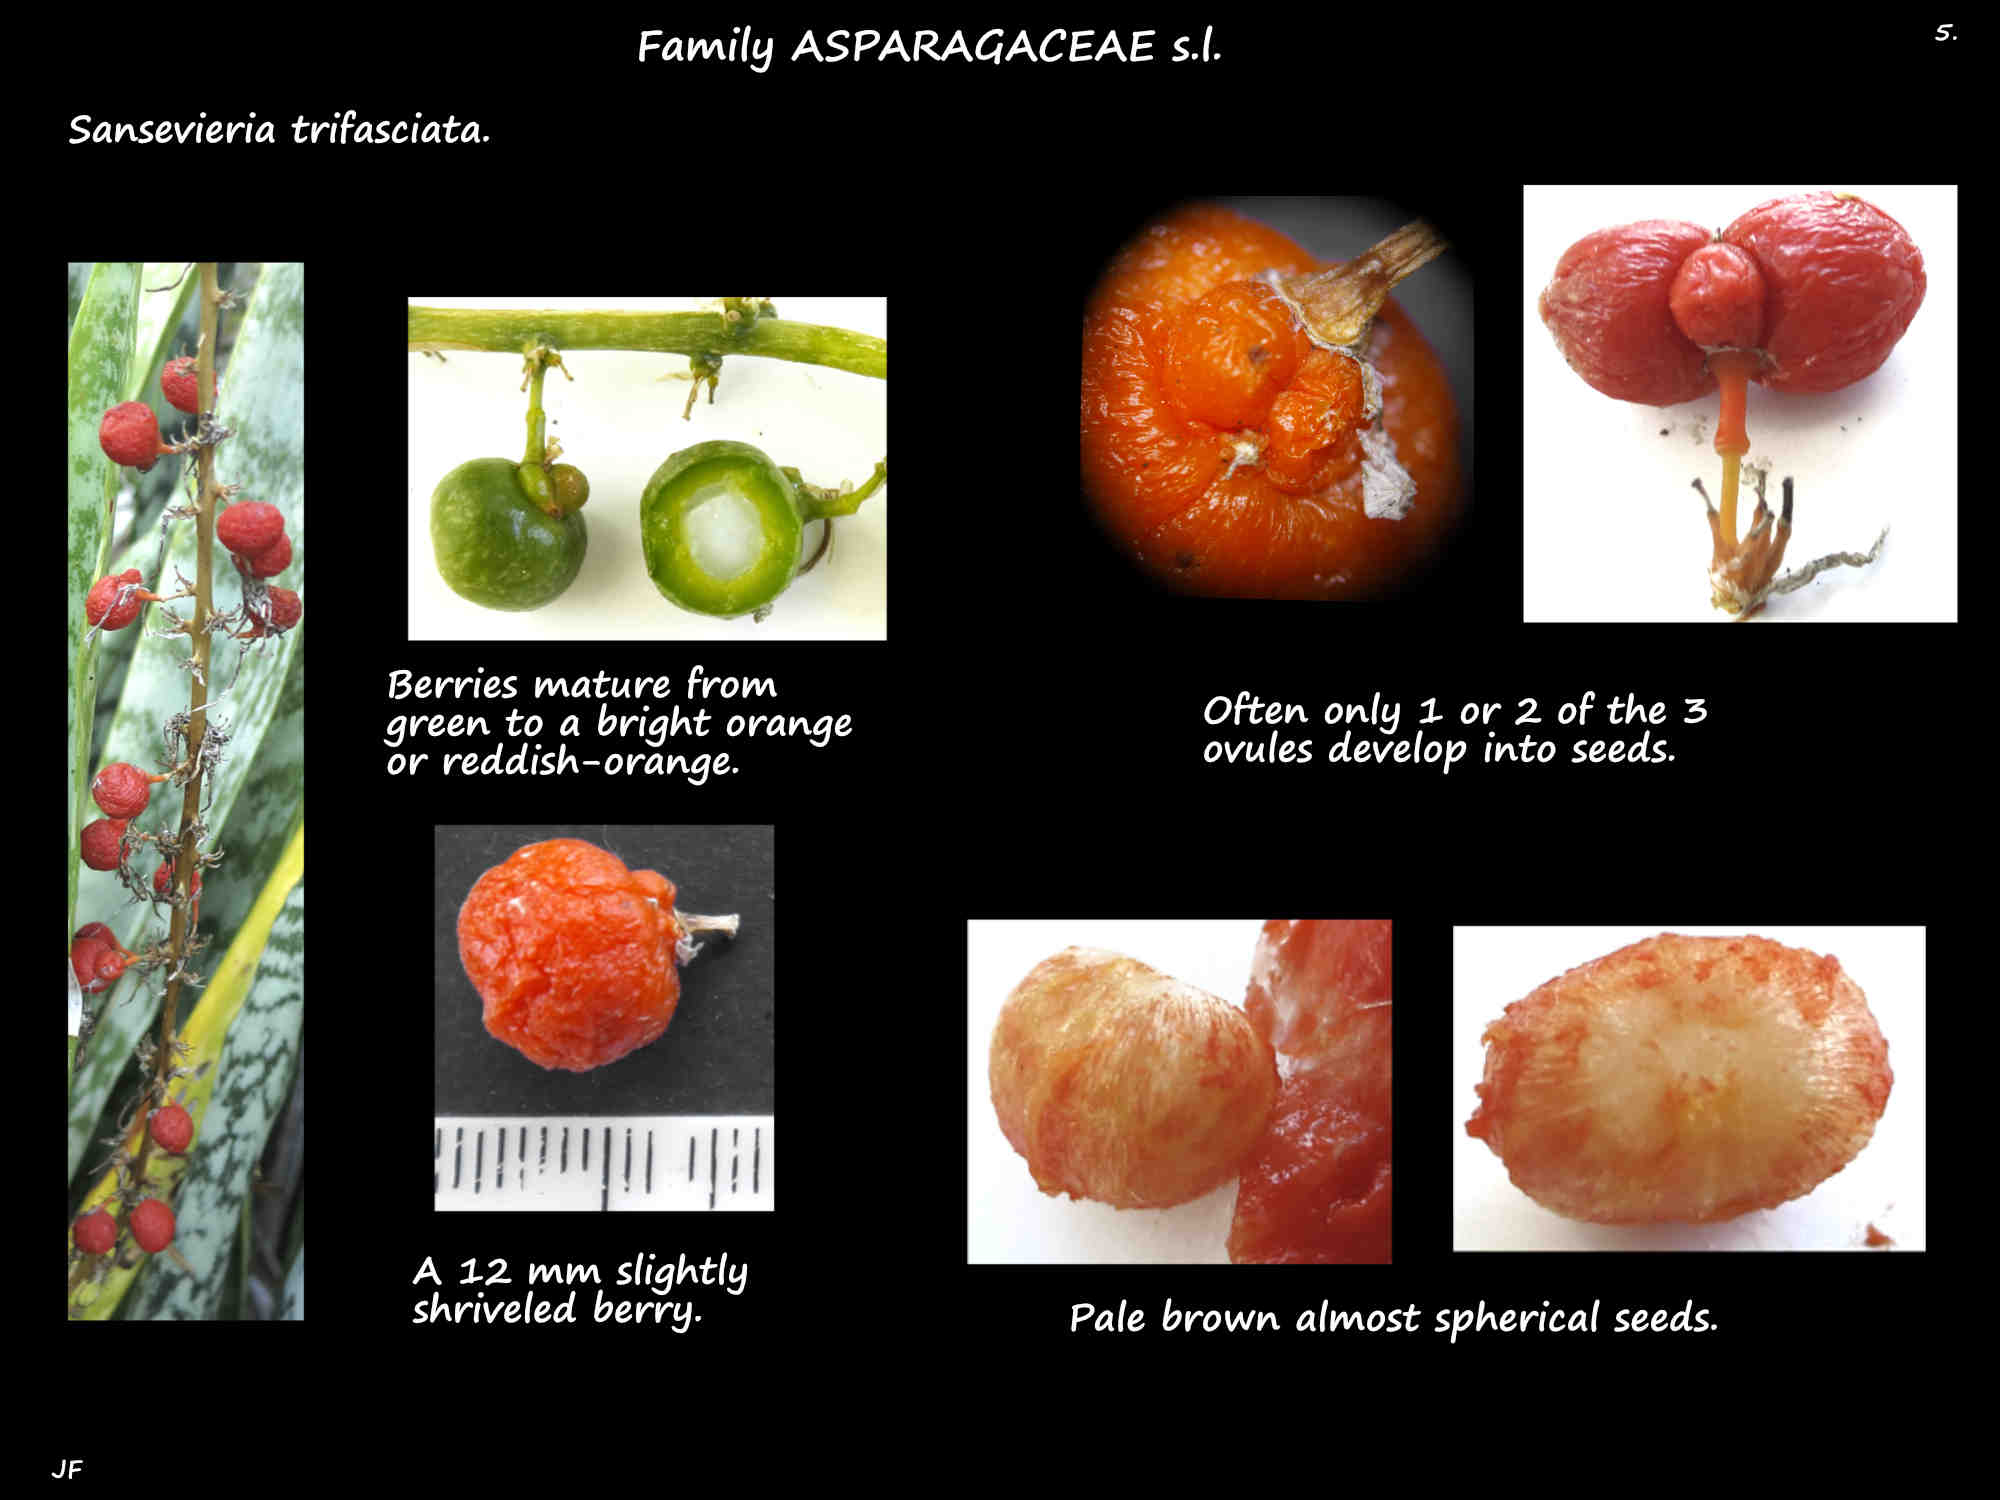 5 The orange berries & pale seeds of Sansevieria trifasciata